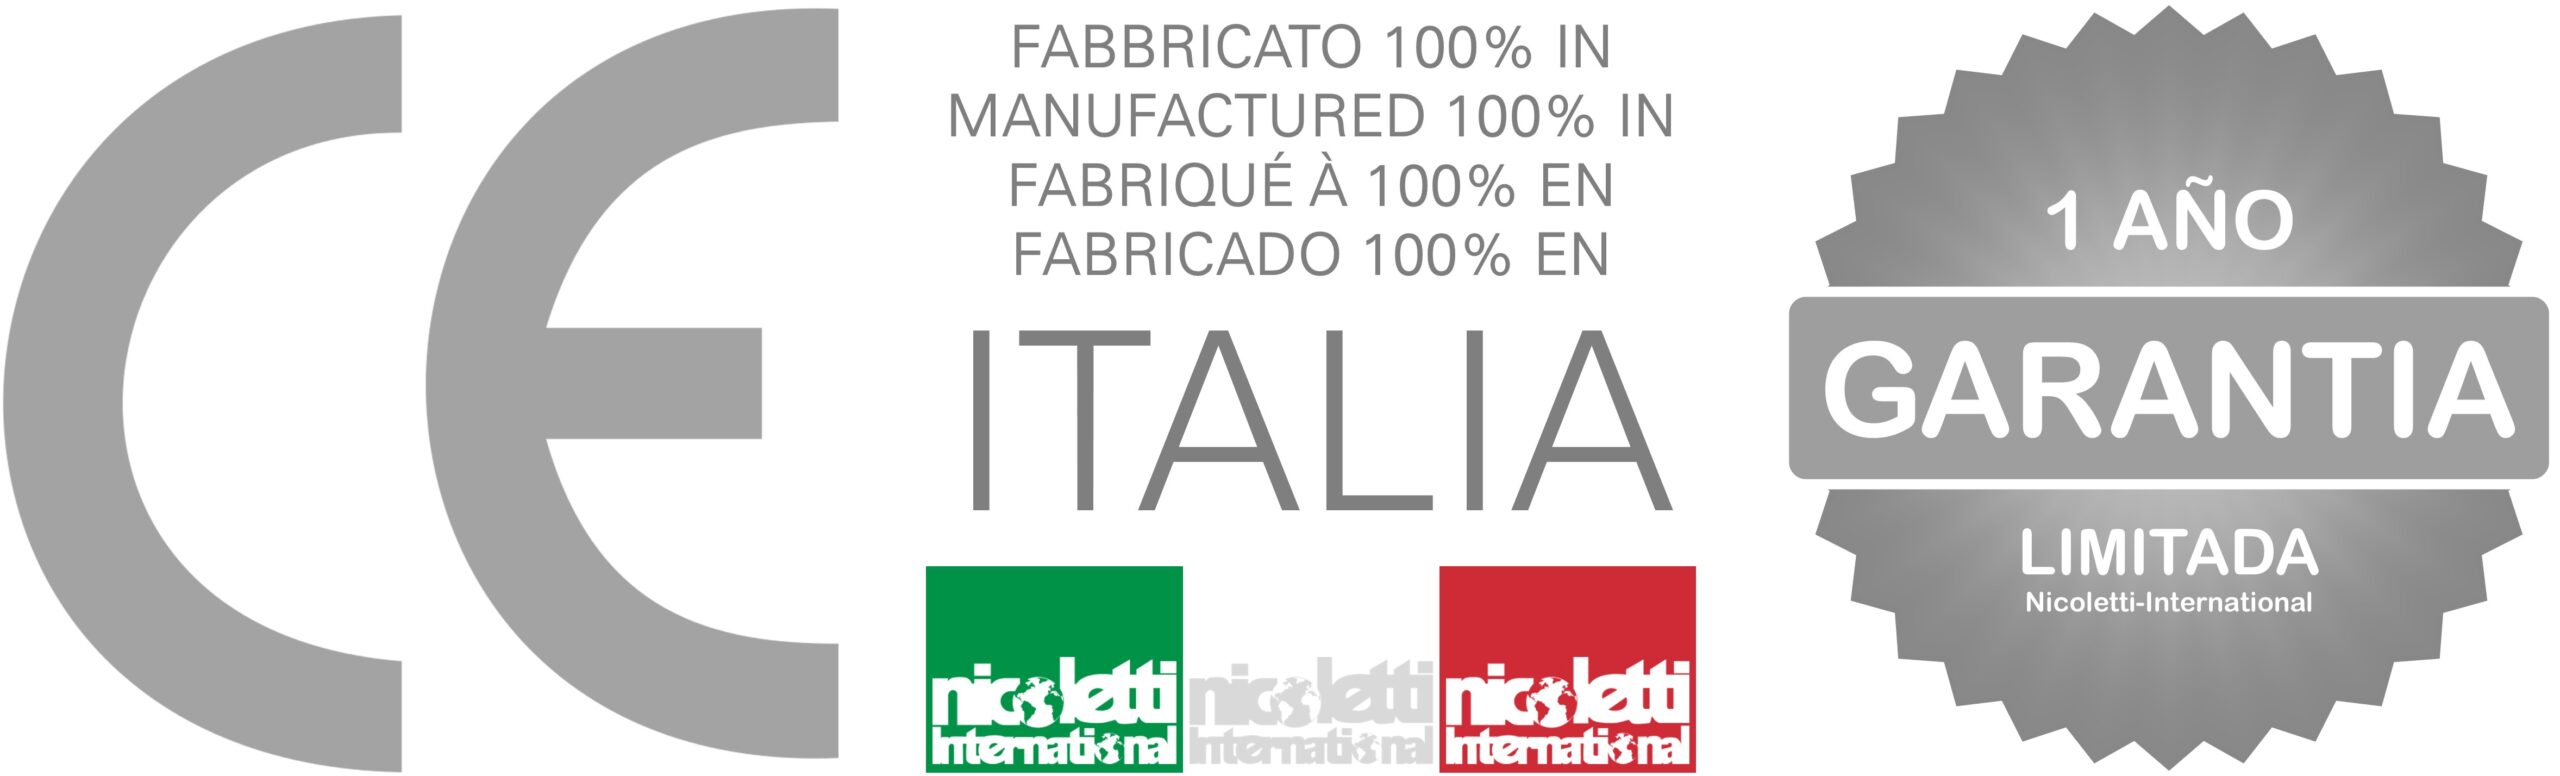 Nicoletti-International - CE Italia Garantía